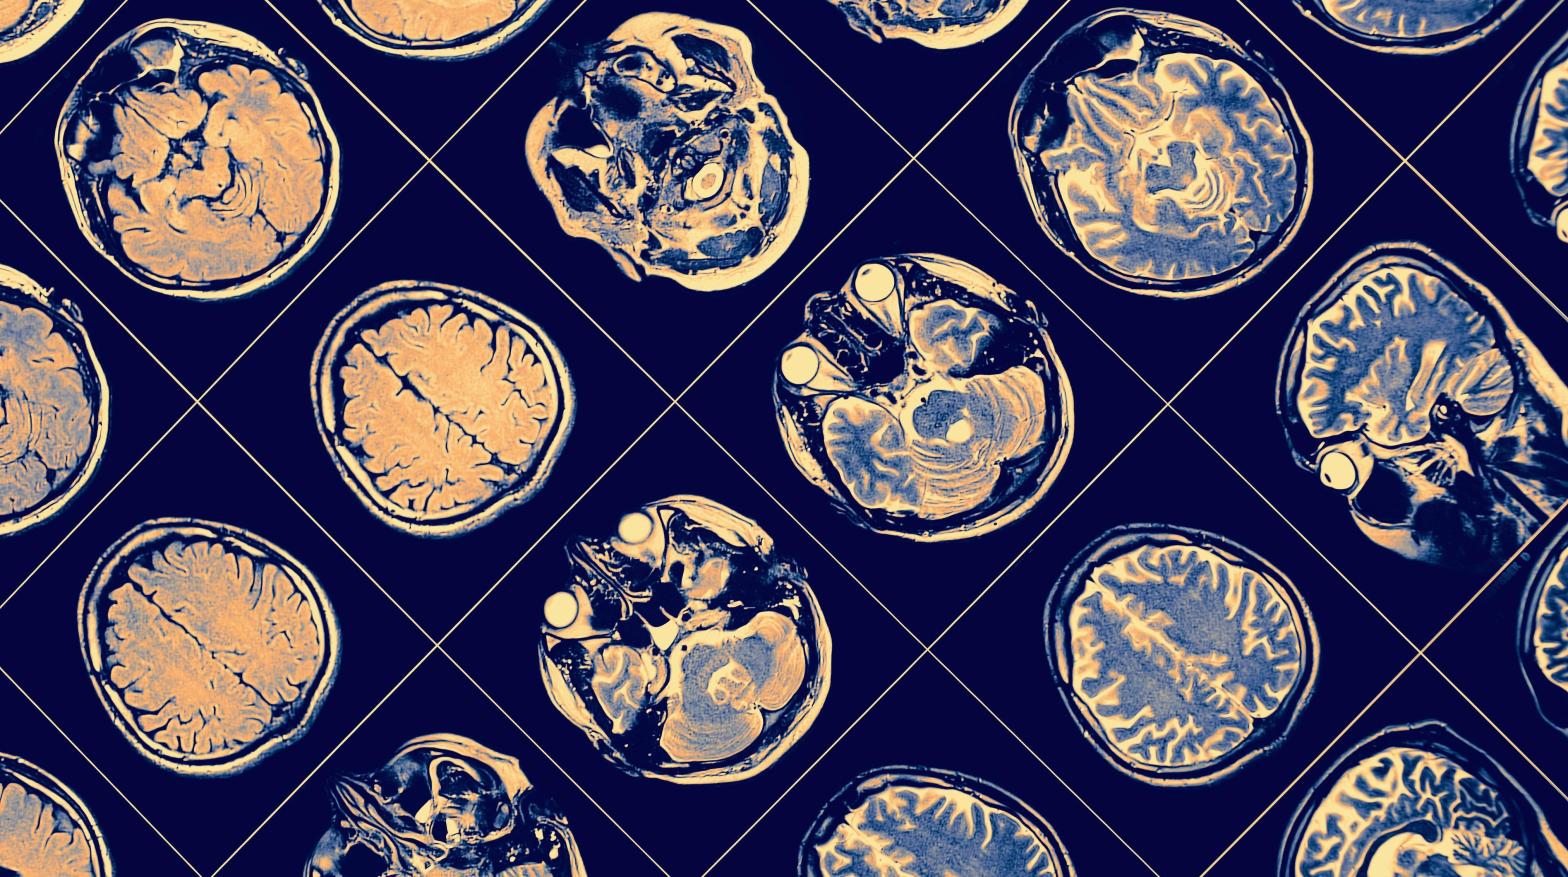 MRI brain images. (Image: Shutterstock, Shutterstock)